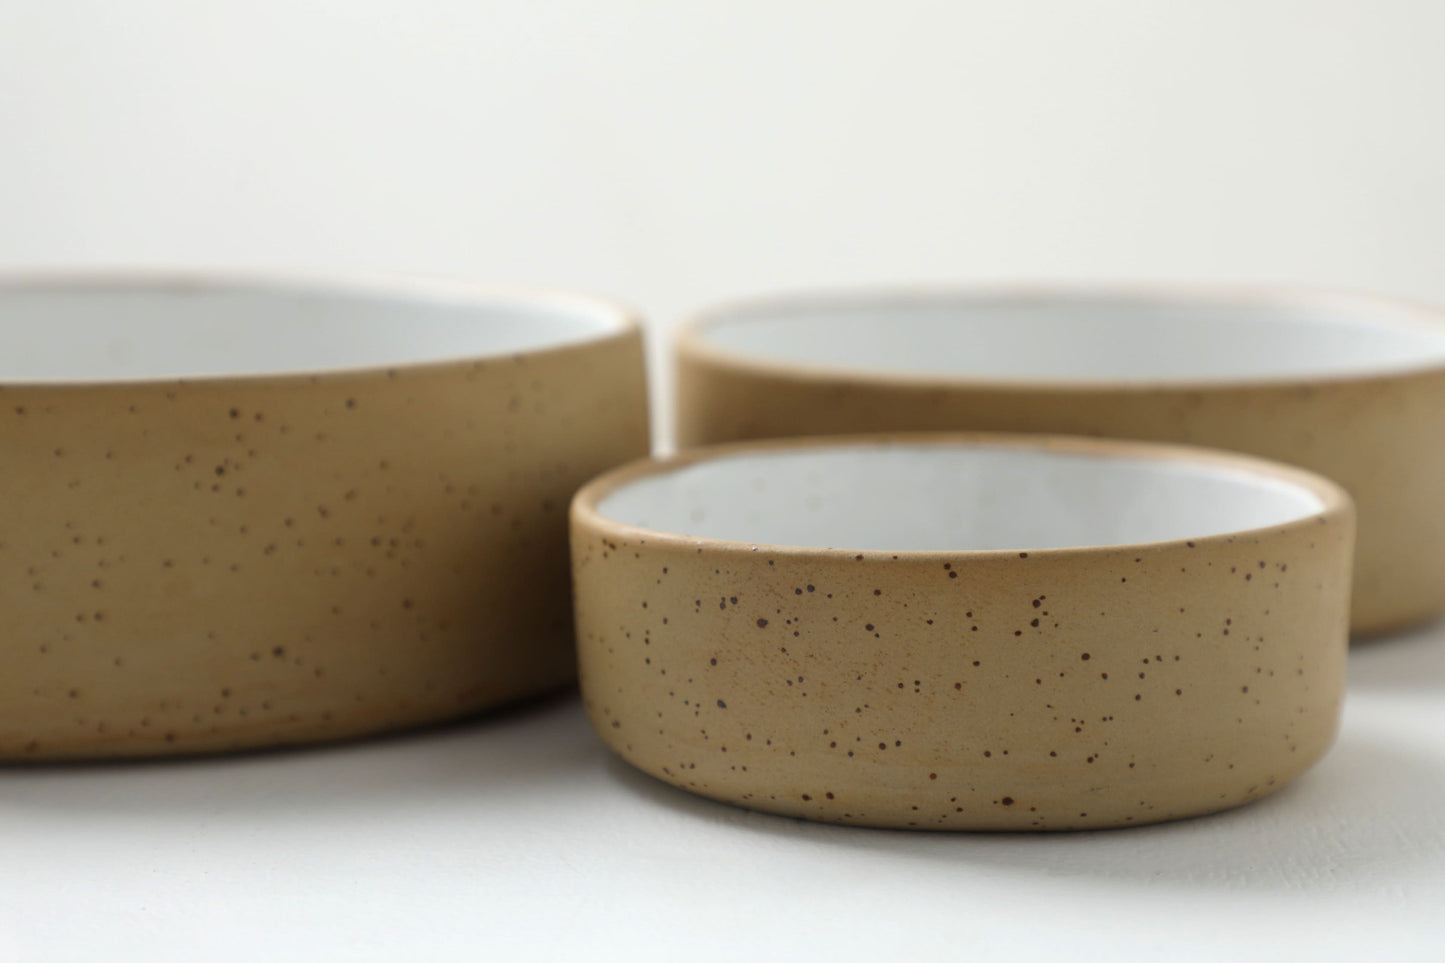 Handmade ceramic dog bowls | RAW+WHITE - premium dog goods handmade in Europe by My Wild Other